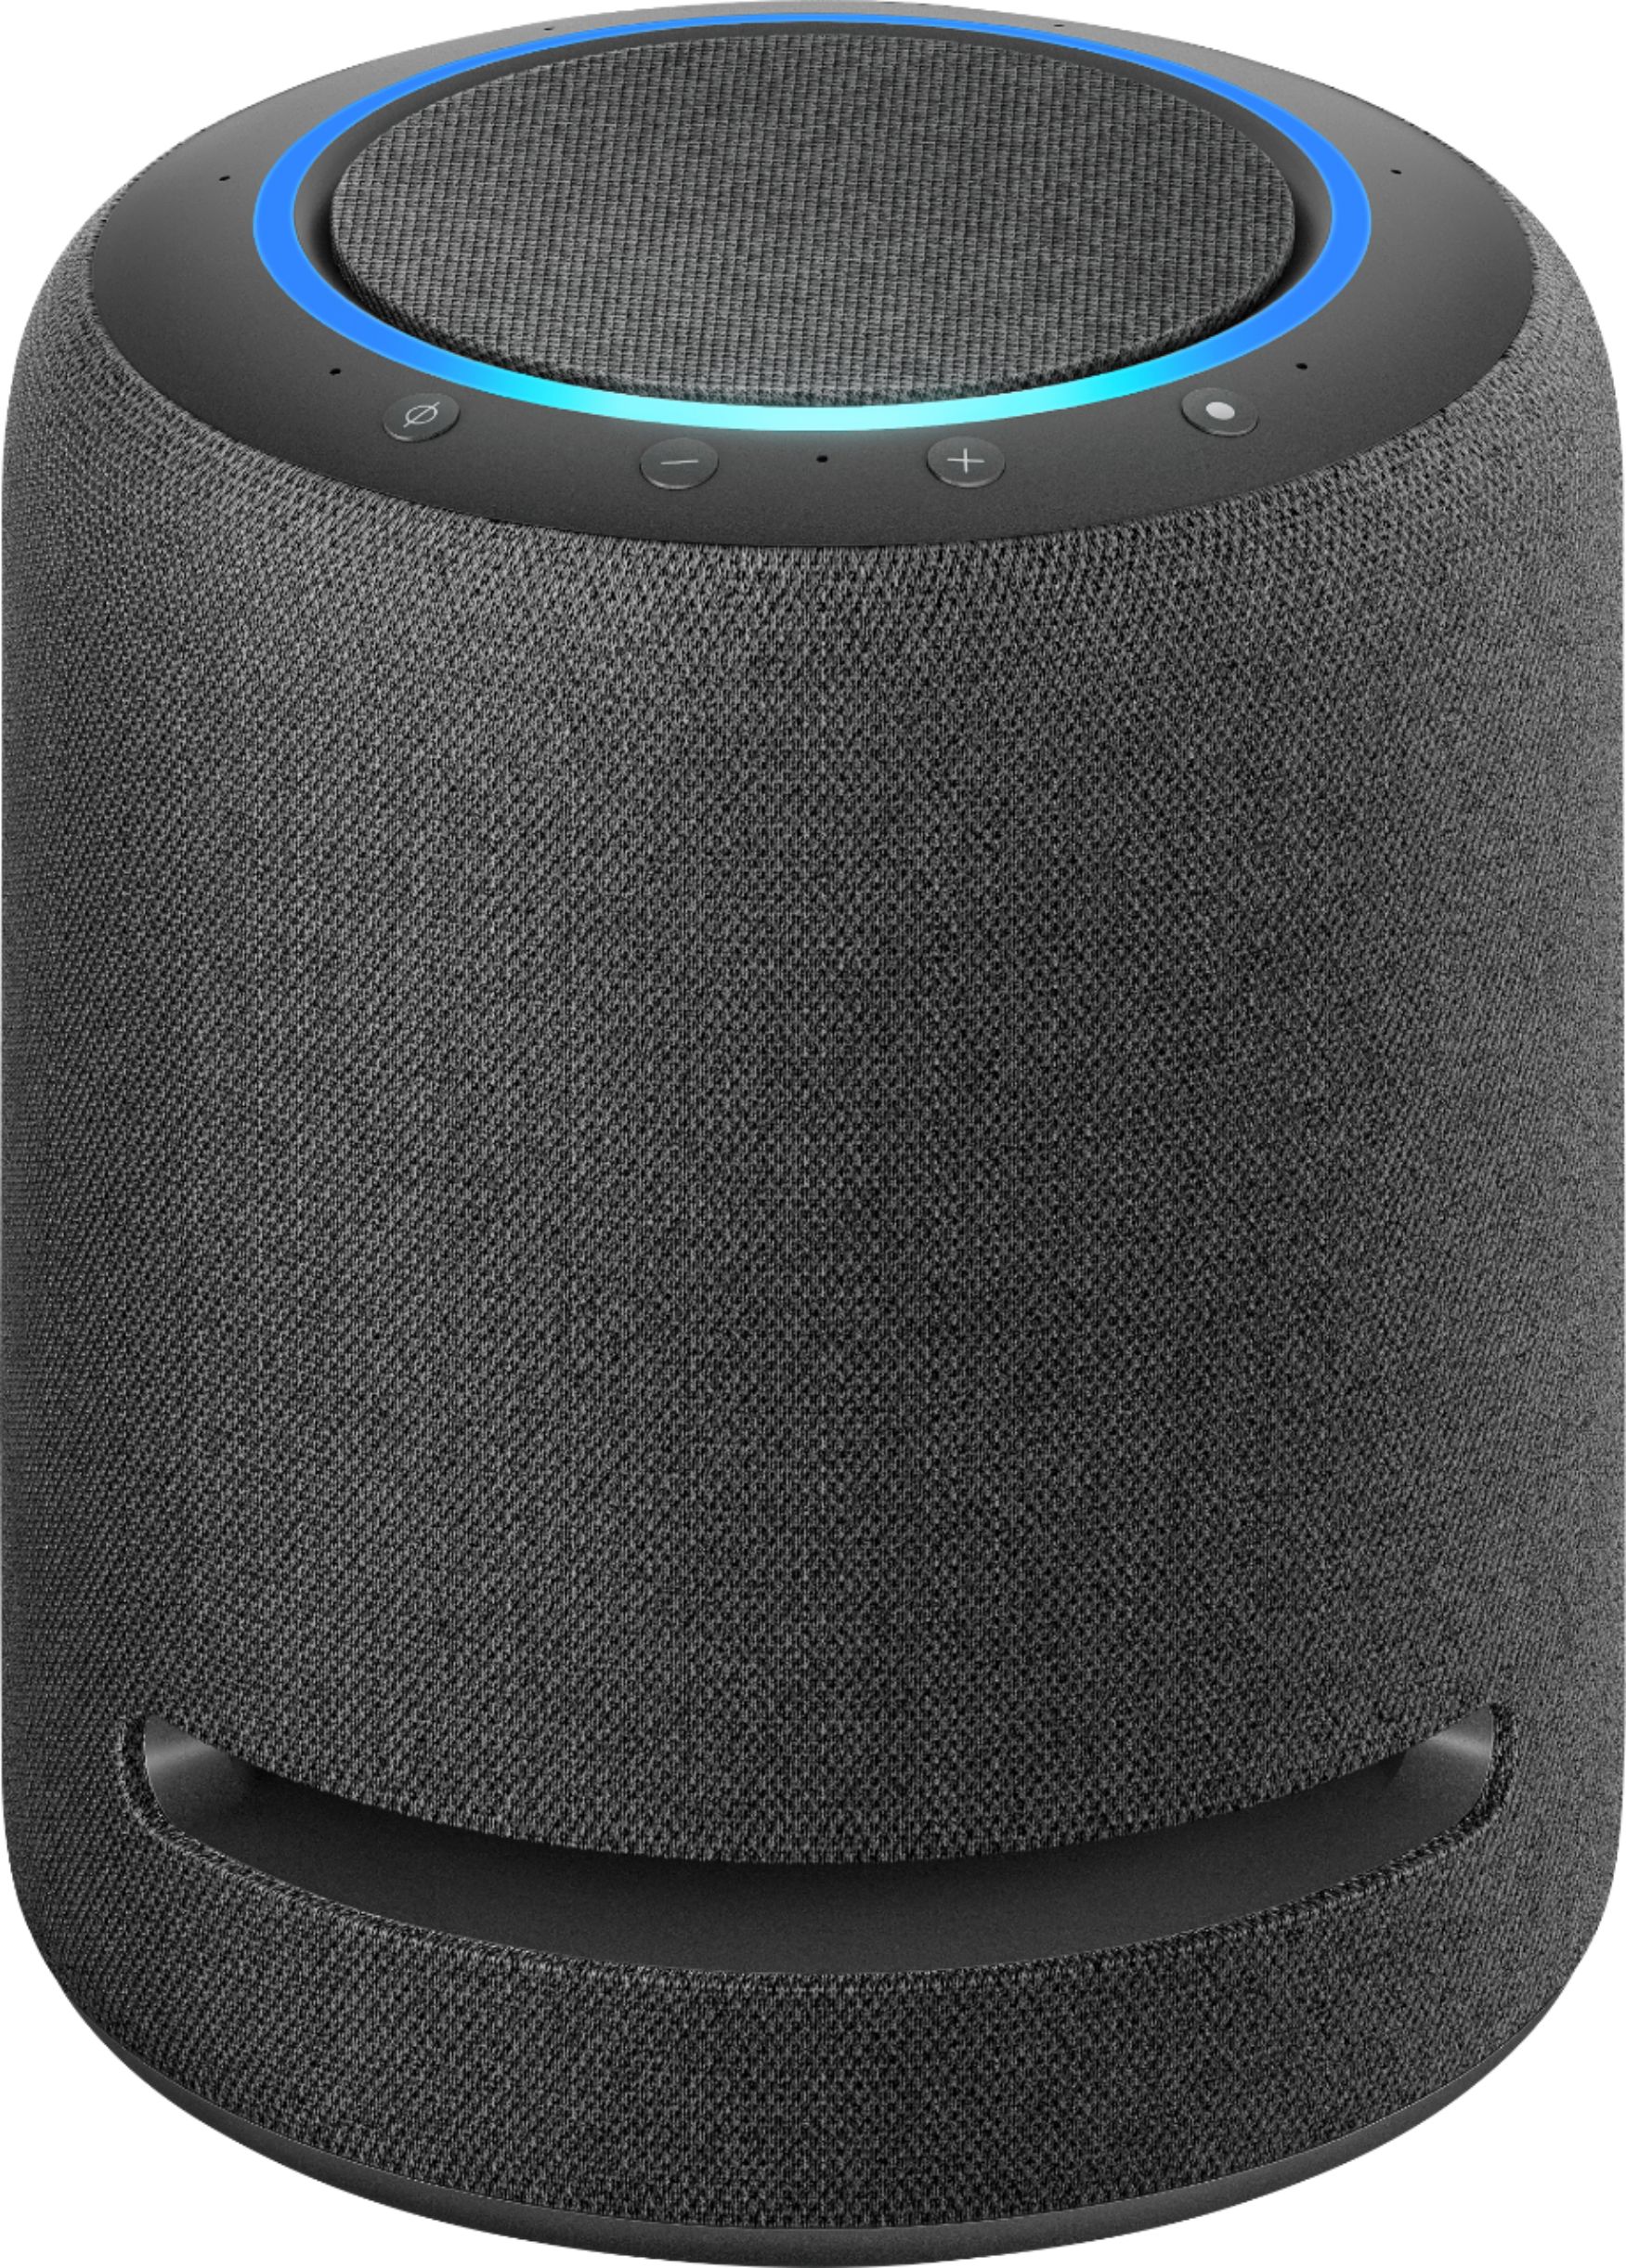 Zoom in on Front Zoom. Amazon - Echo Studio Smart Speaker with Alexa - Charcoal.